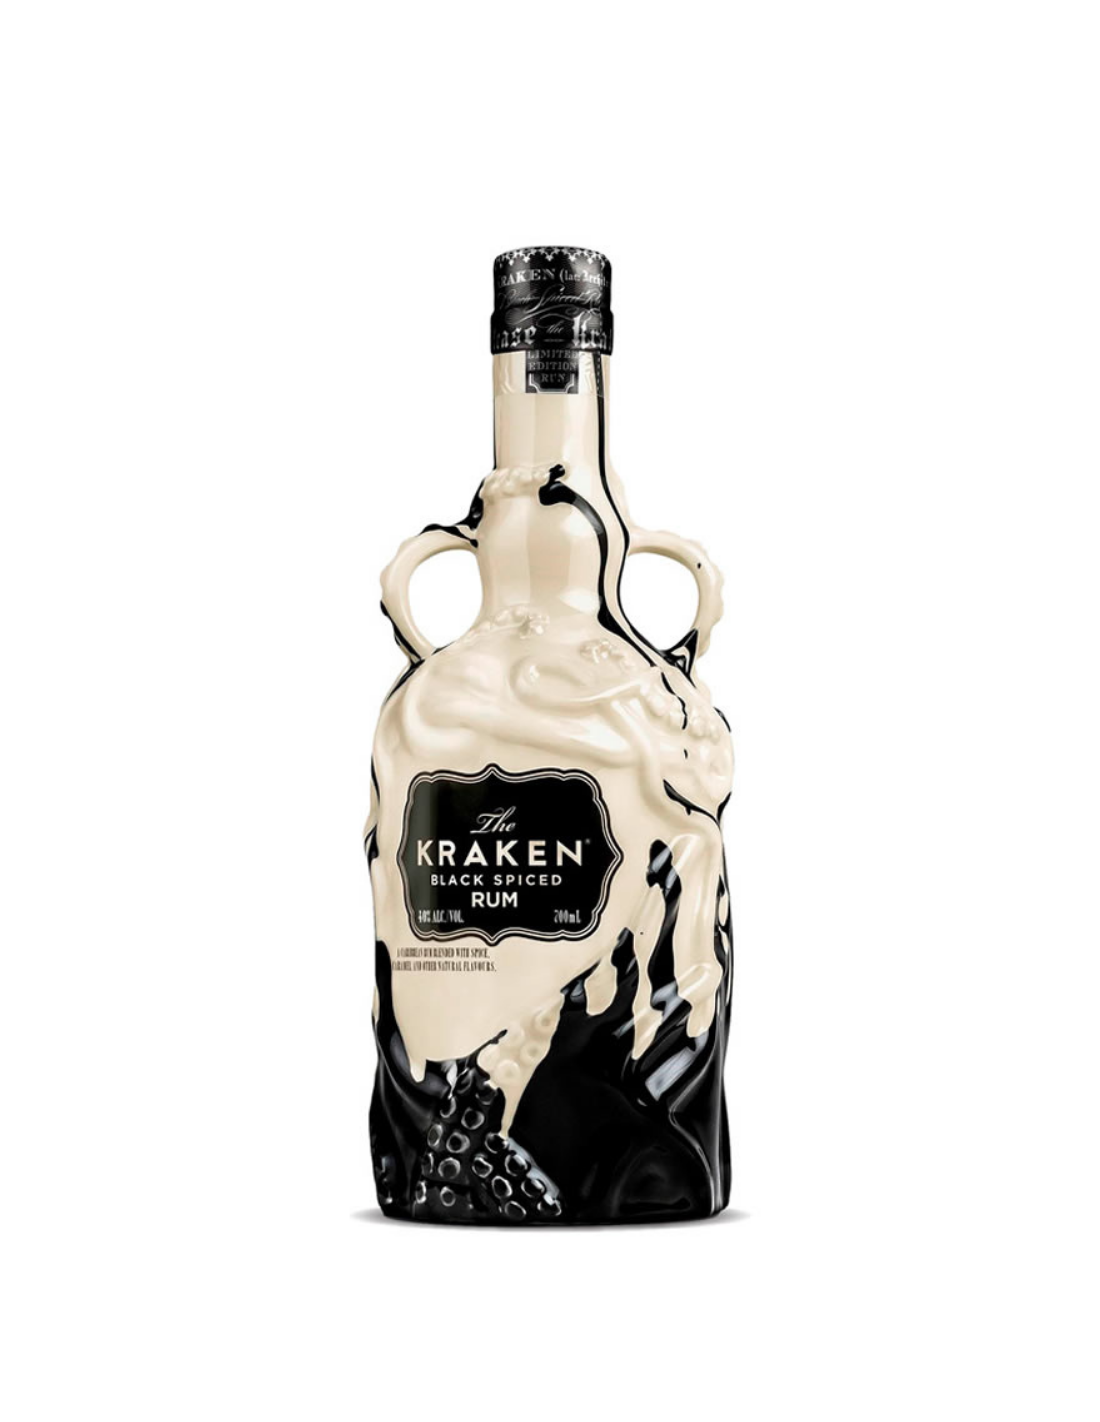 Rom negru The Kraken Black Spiced Ceramic Edition, 0.7L, 40% alc., Caraibe alcooldiscount.ro